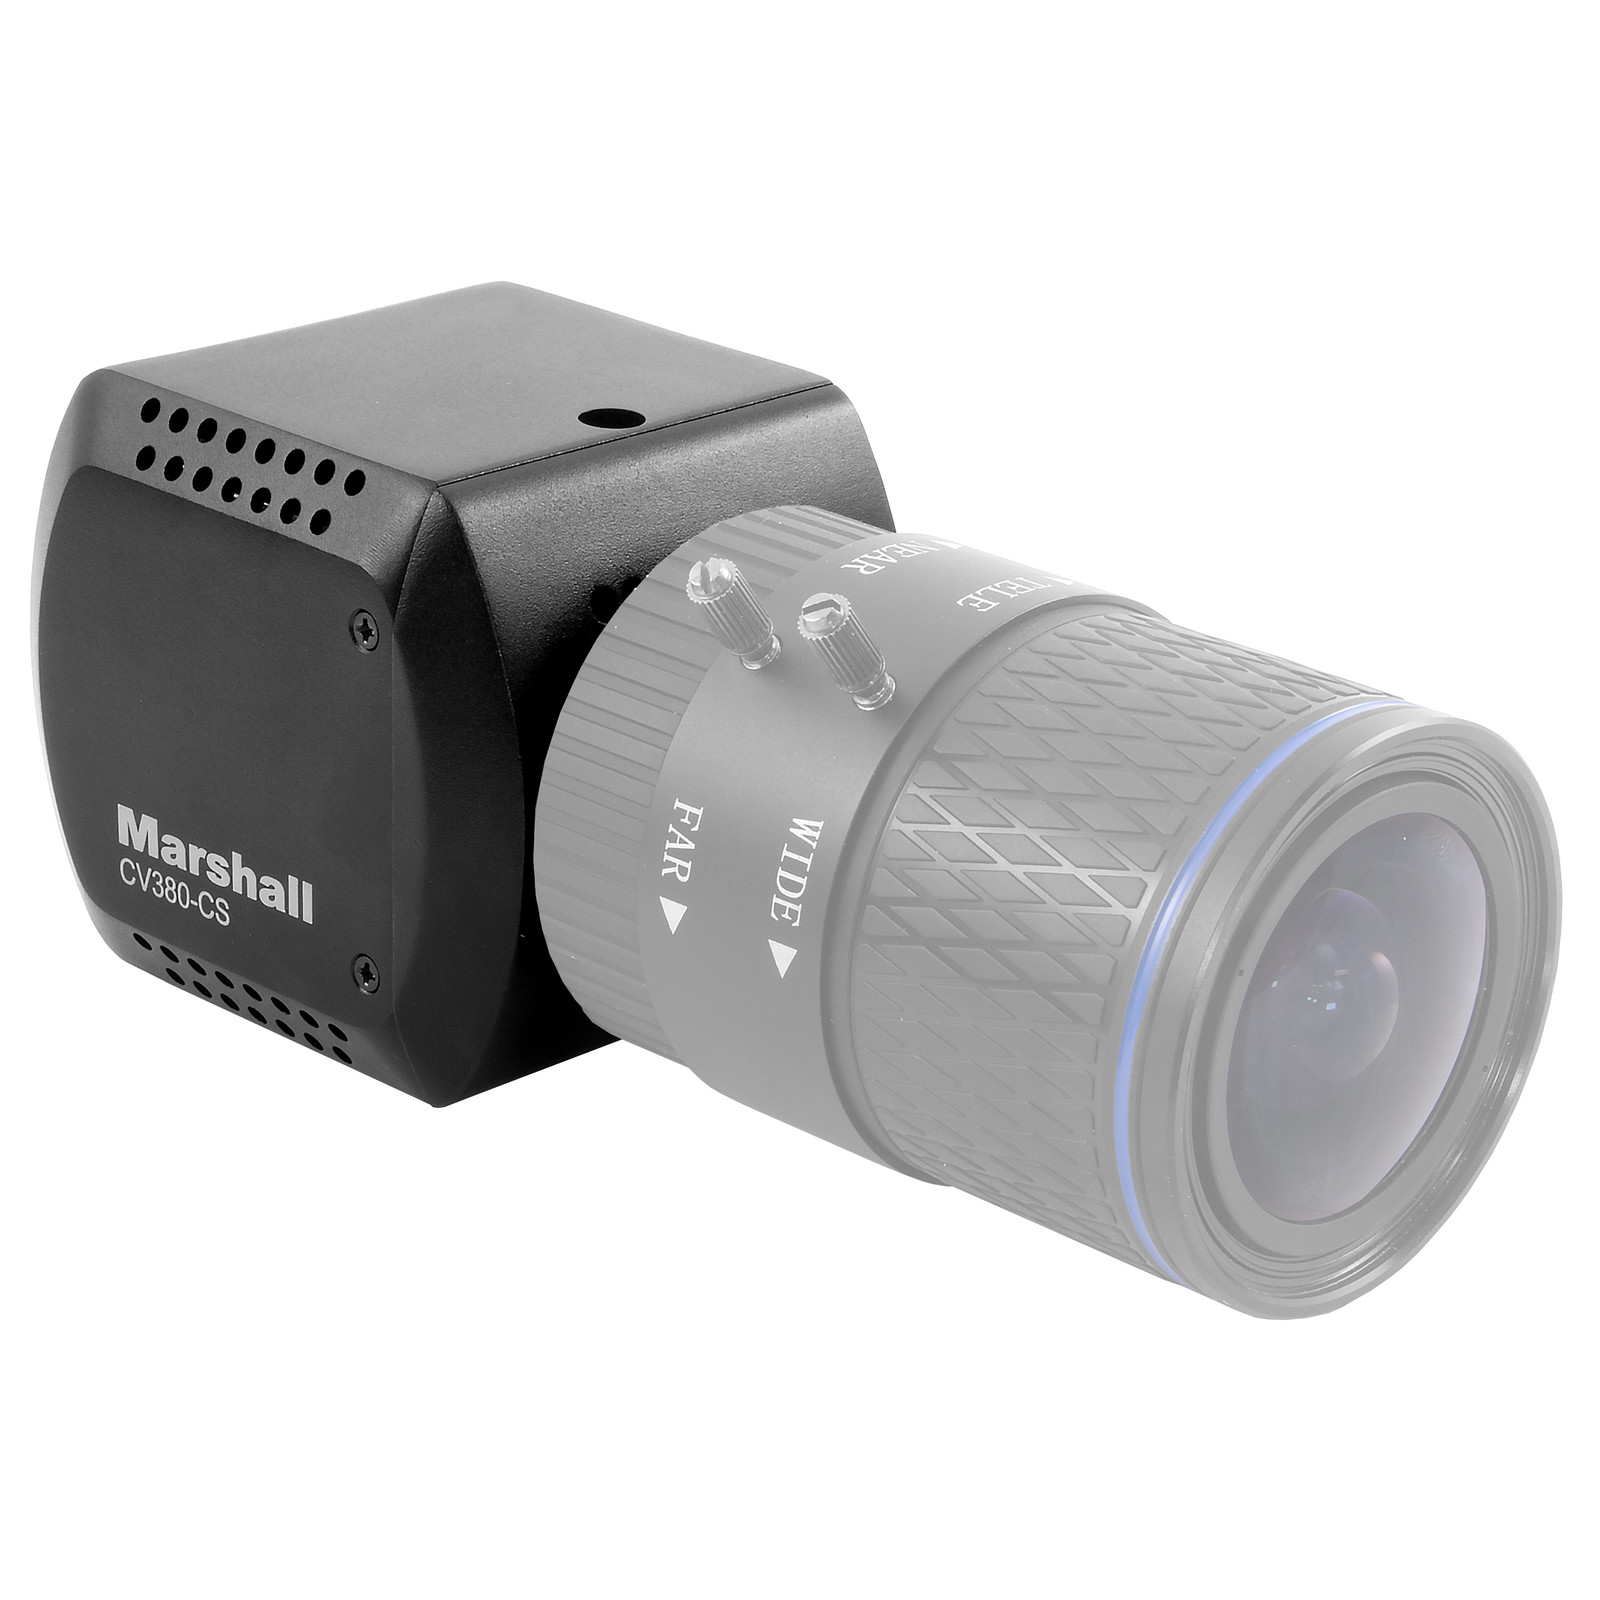 Marshall 4K Compact Broadcast Camera with CS Lens Mount – 6G-SDI & HDMI 1.4 Outputs